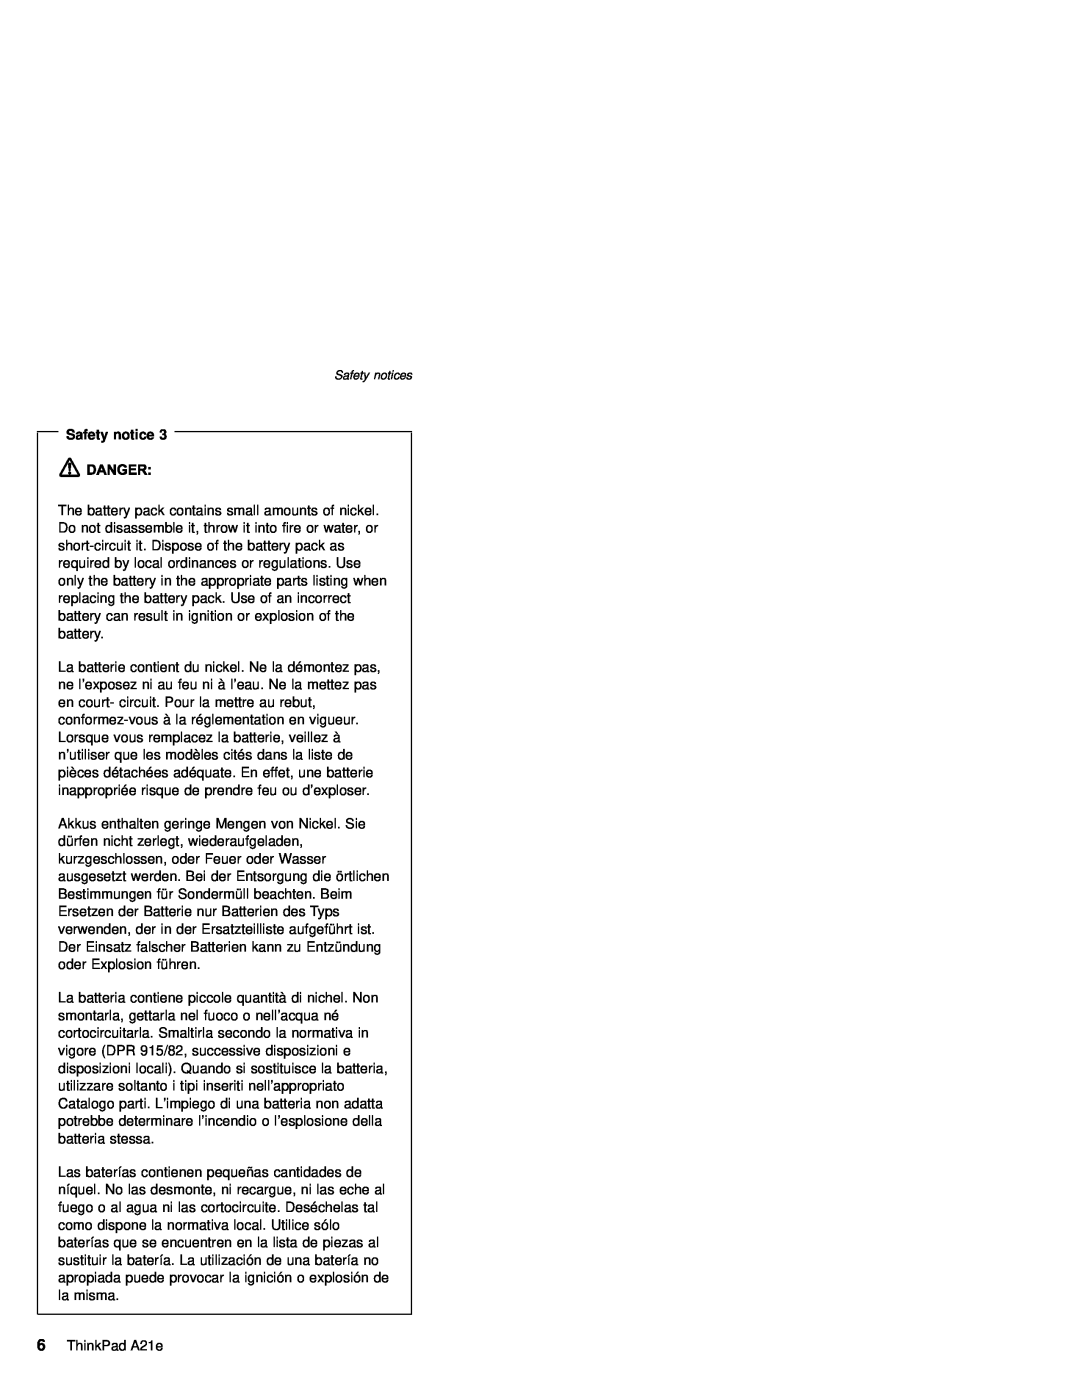 IBM MT 2632 manual Safety notice, ThinkPad A21e 